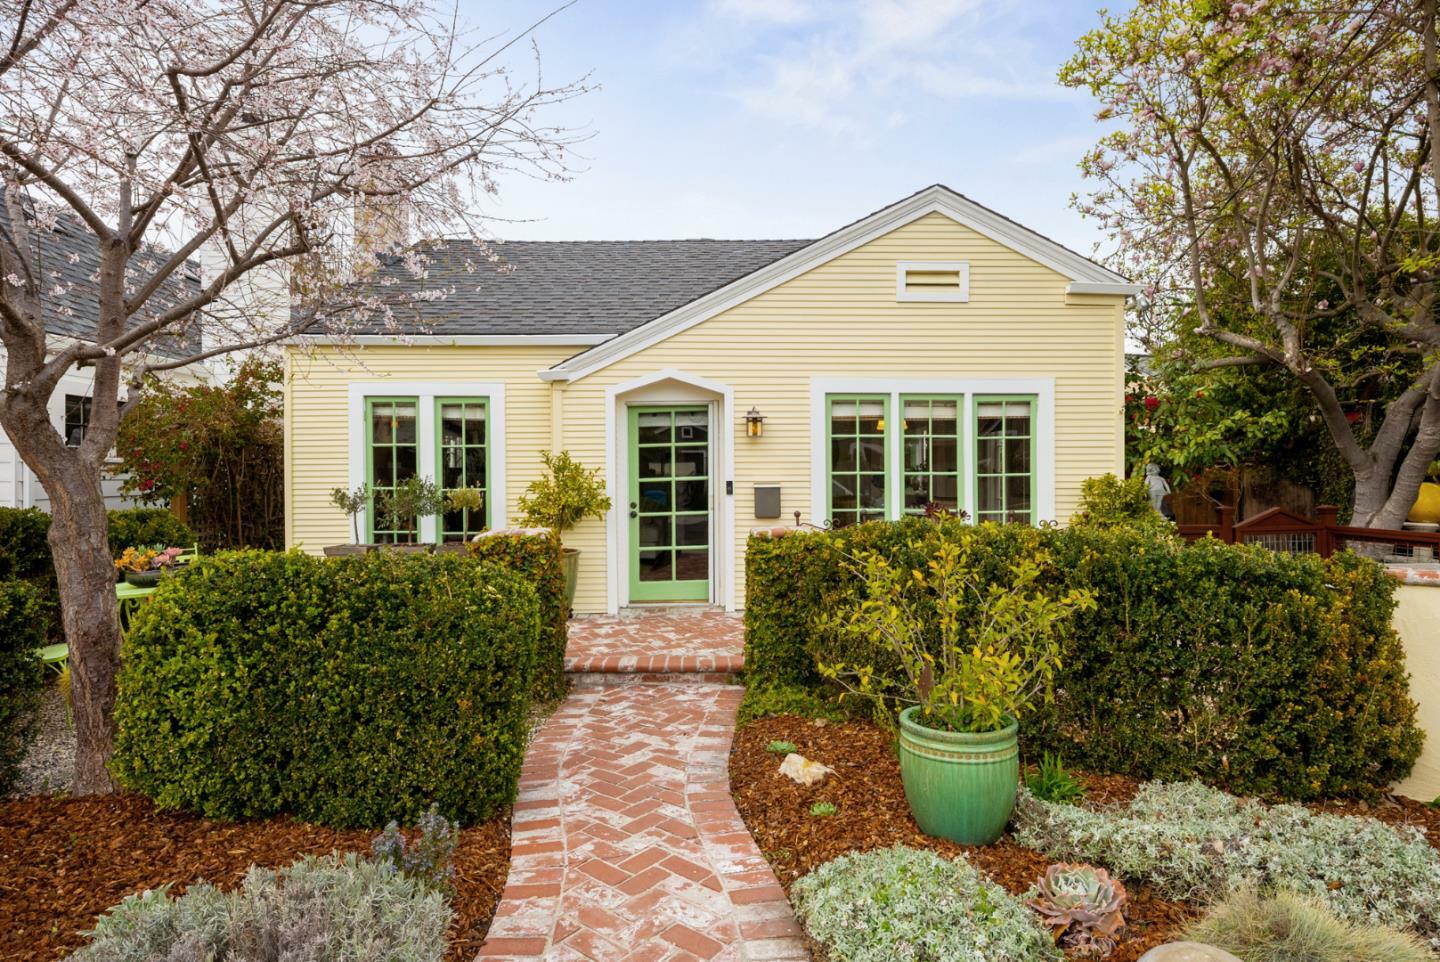 Home for sale in Santa Clara: 633 Park Court Santa Clara CA 95050